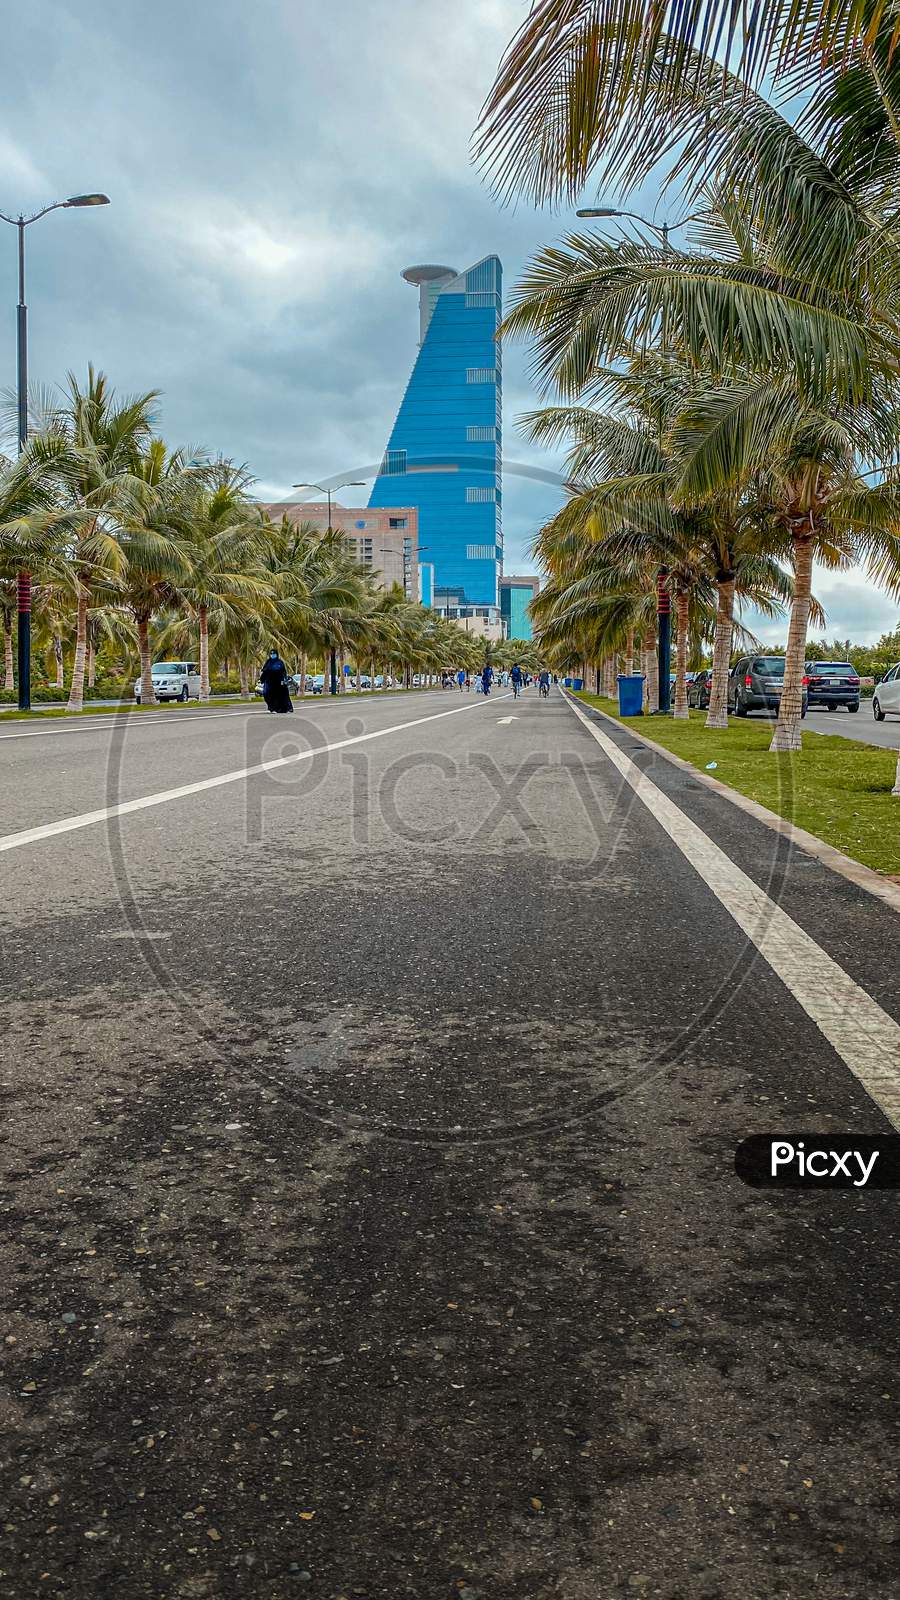 Walking Path Street In Corniche, Jeddah, Saudi Arabia, 2021